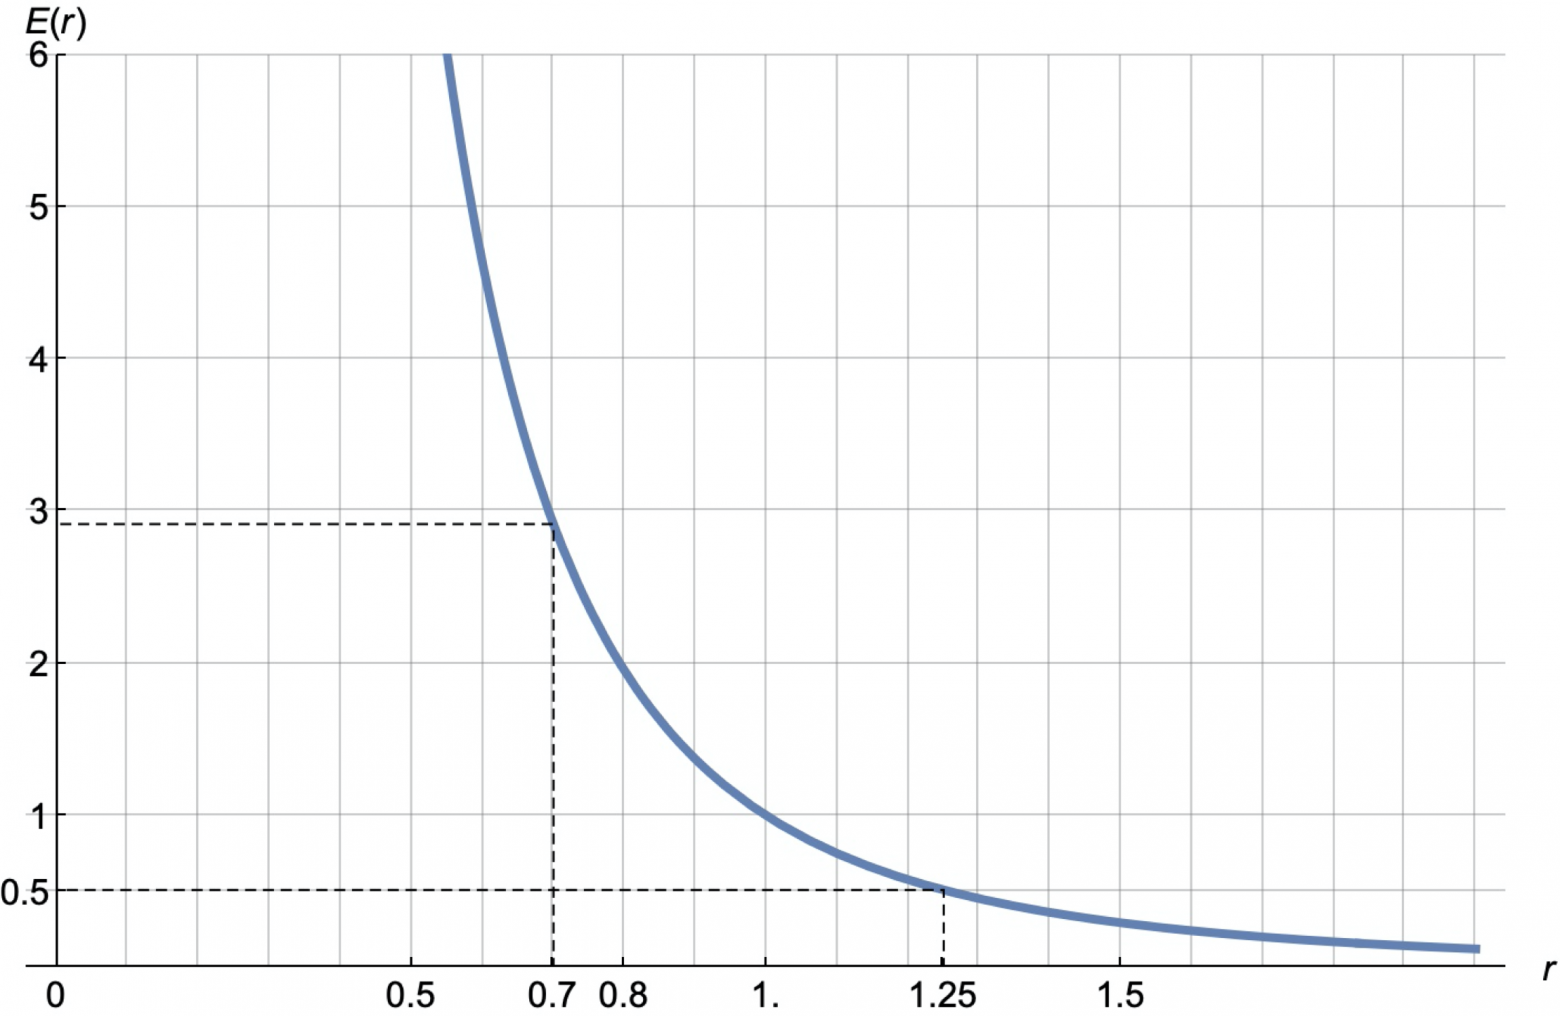 Normalized demand curve  E(r) = r^(-s),  s = 3